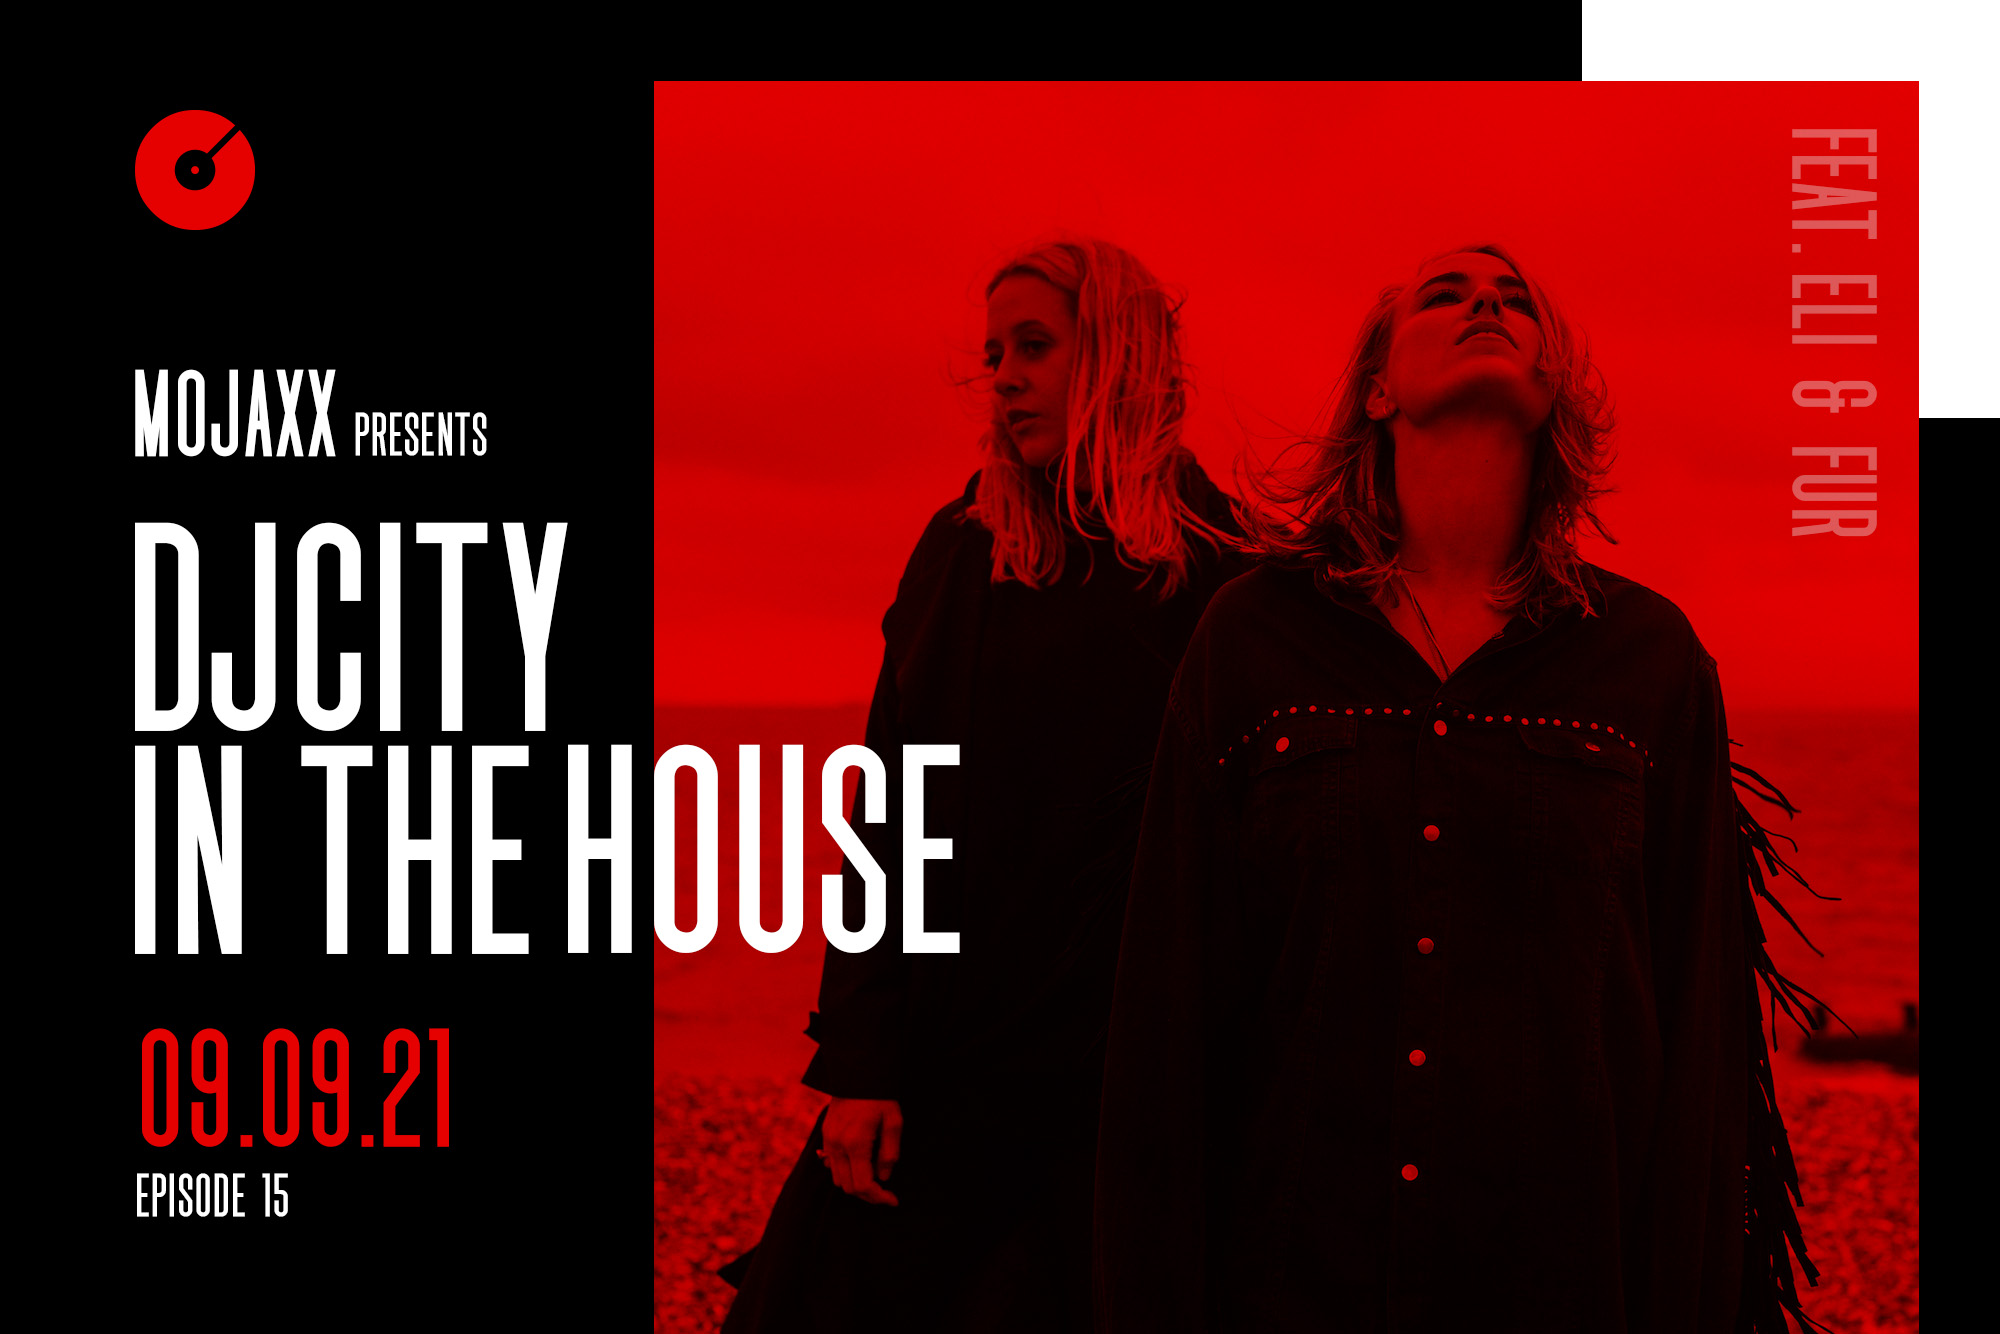 Listen to ‘DJcity in the House’ Feat. Mojaxx: September 9